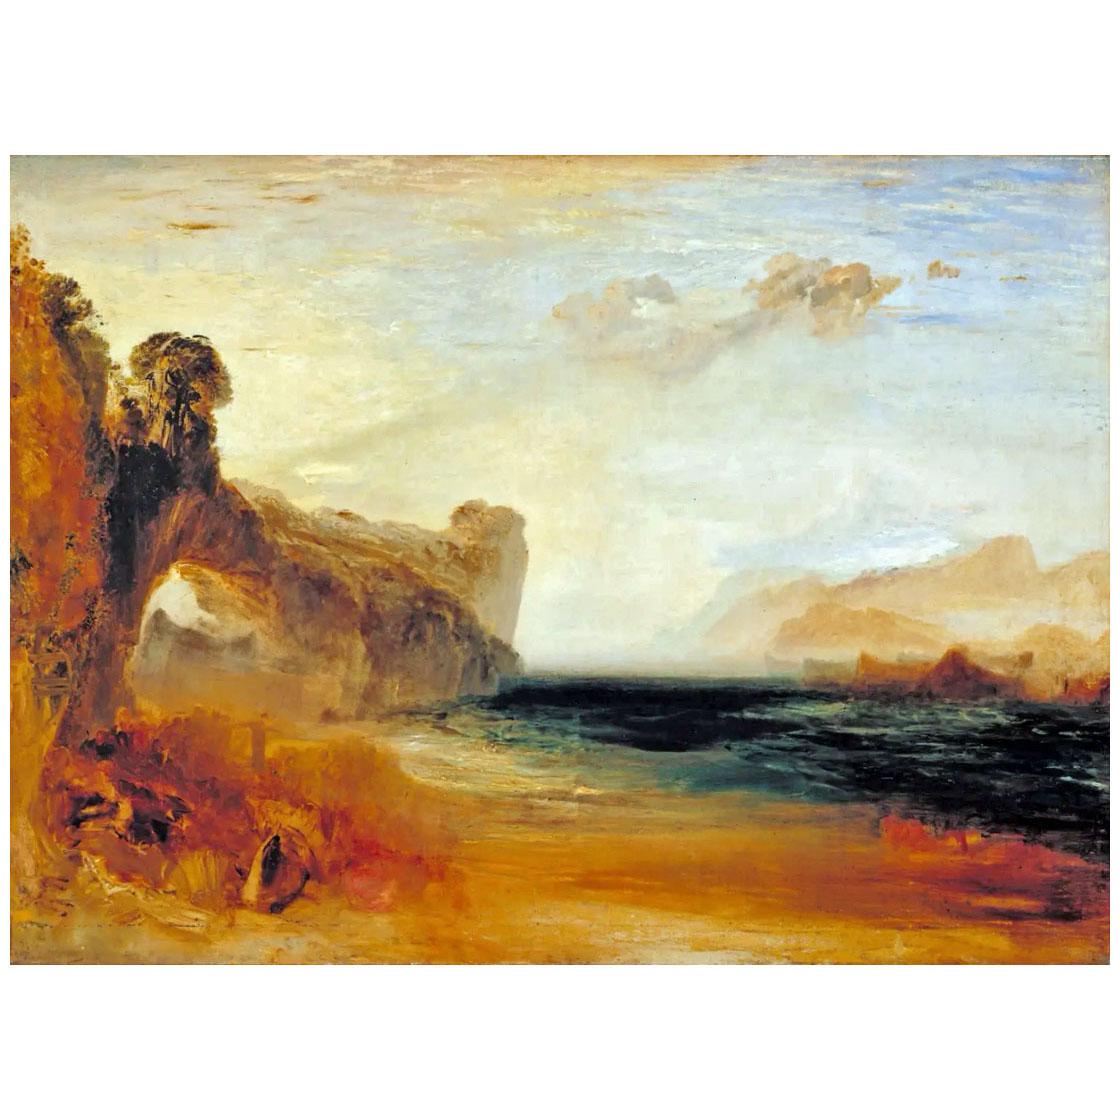 William Turner. Rocky Bay. 1830. Tate Britain